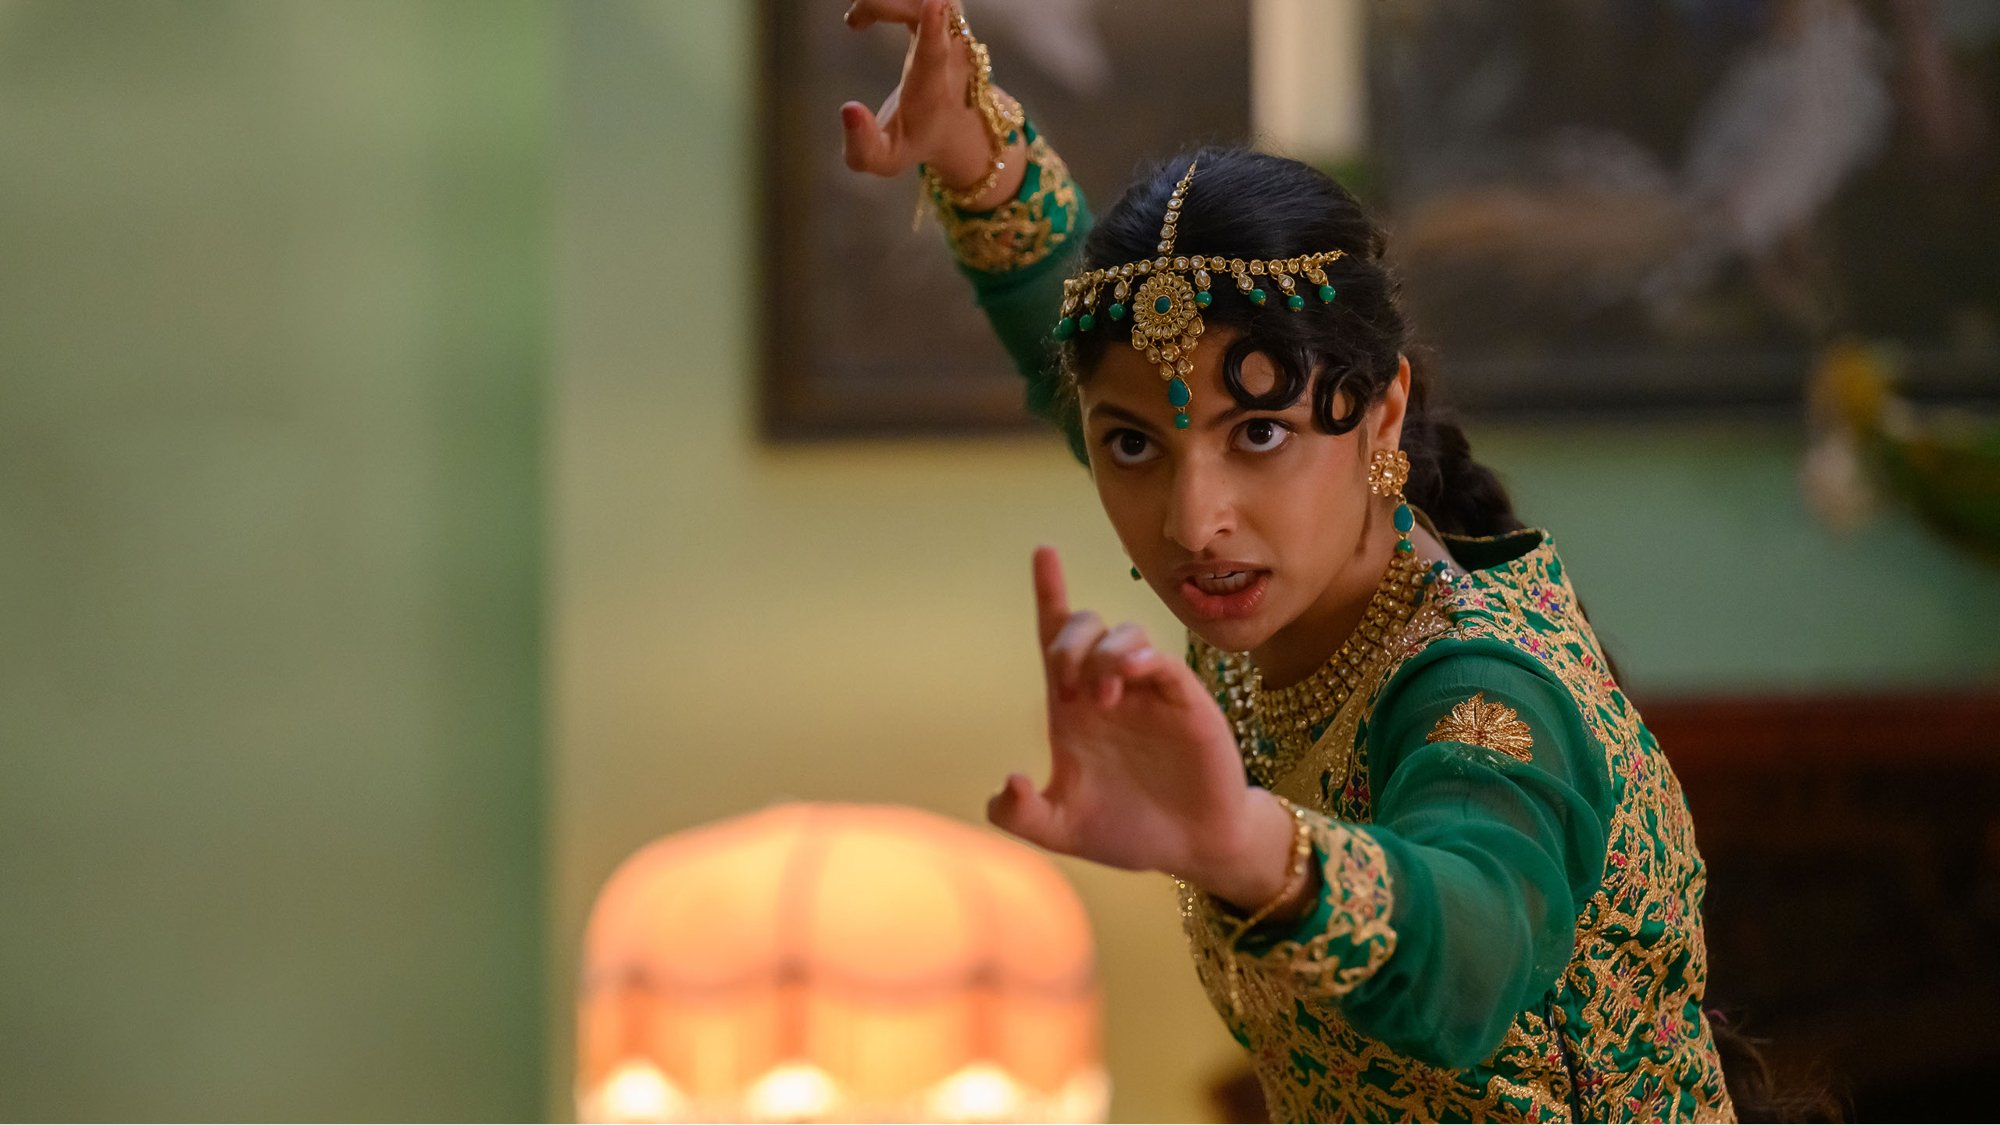 'Polite Society' Priya Kansara as Ria Khan in a fighting pose, wearing a green and gold dress.